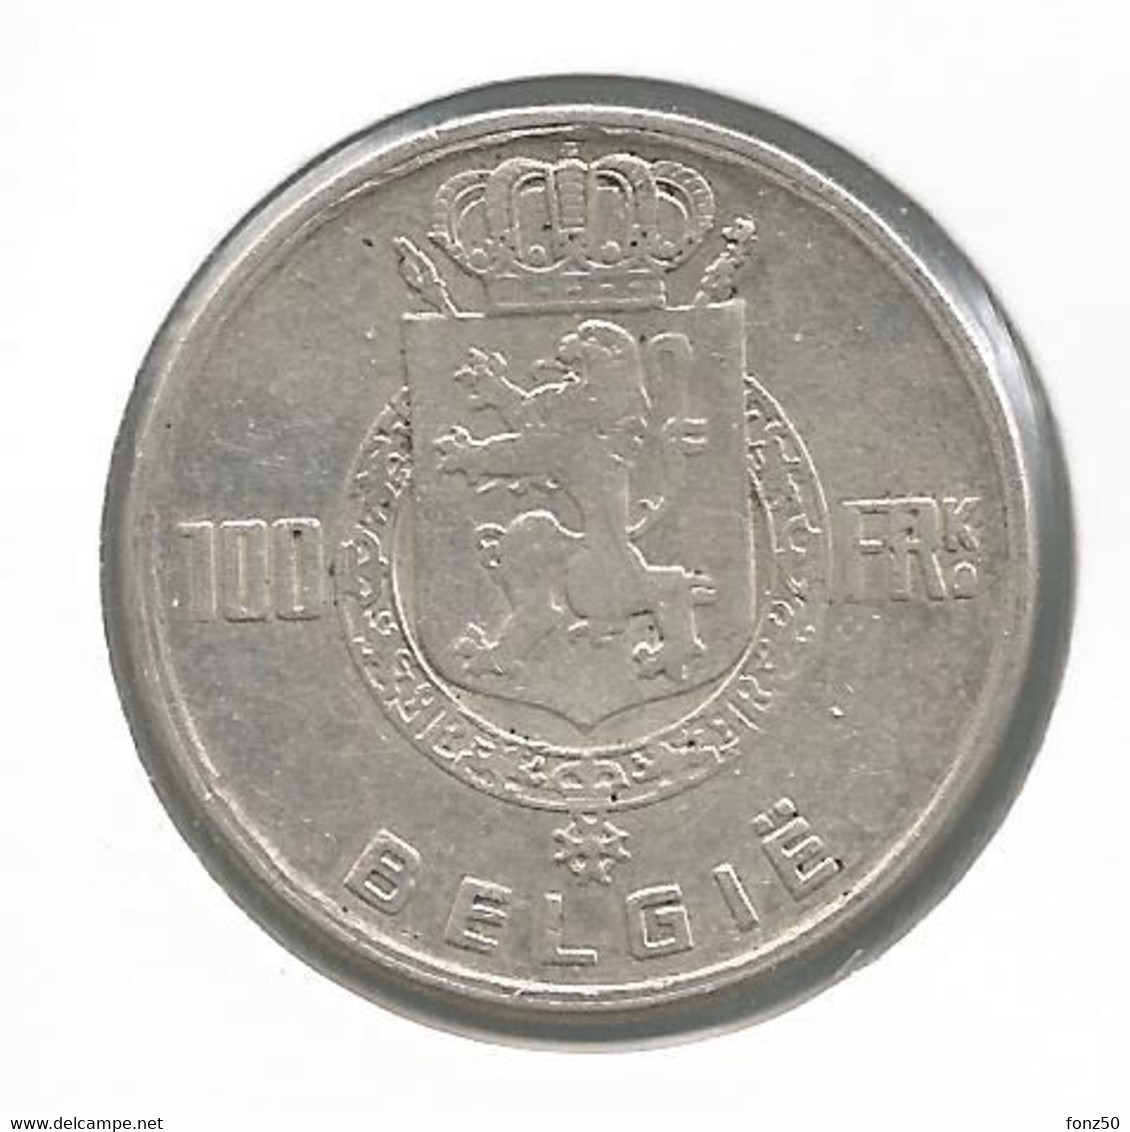 PRINS KAREL * 100 Frank 1951 Vlaams * Nr 12210 - 100 Franc